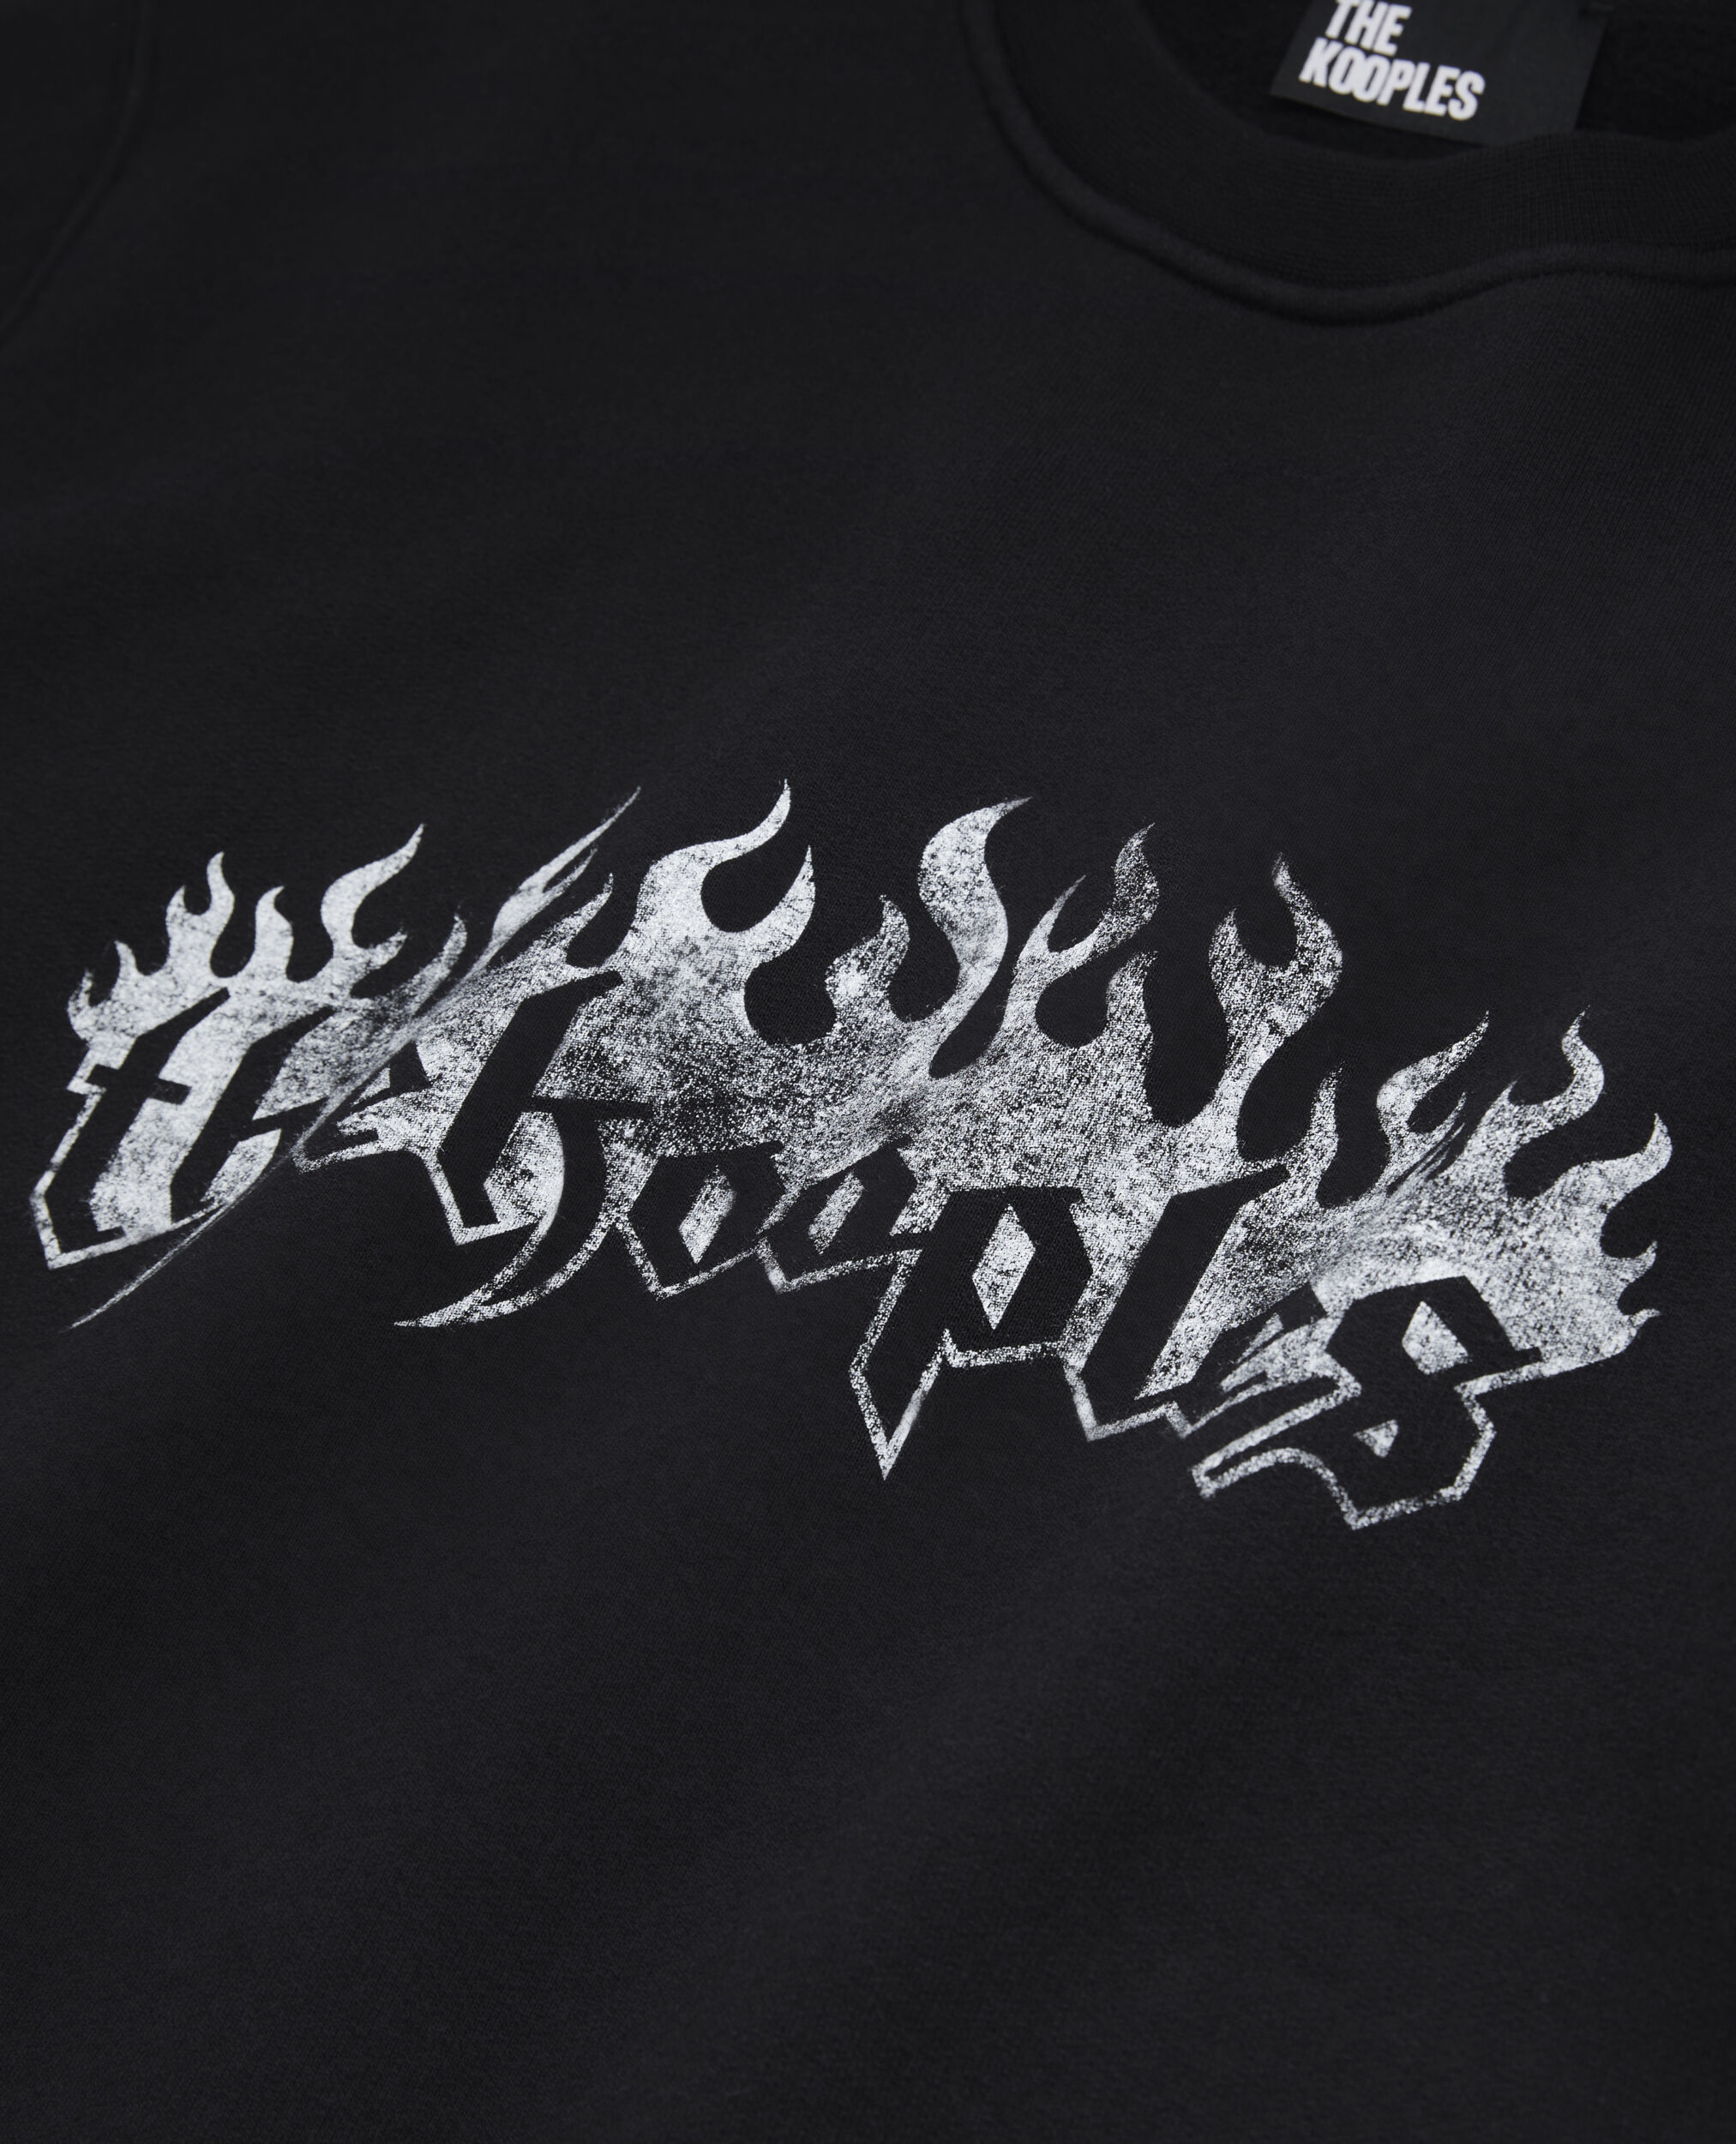 Men's Black sweatshirt with Kooples on fire serigraphy, BLACK, hi-res image number null